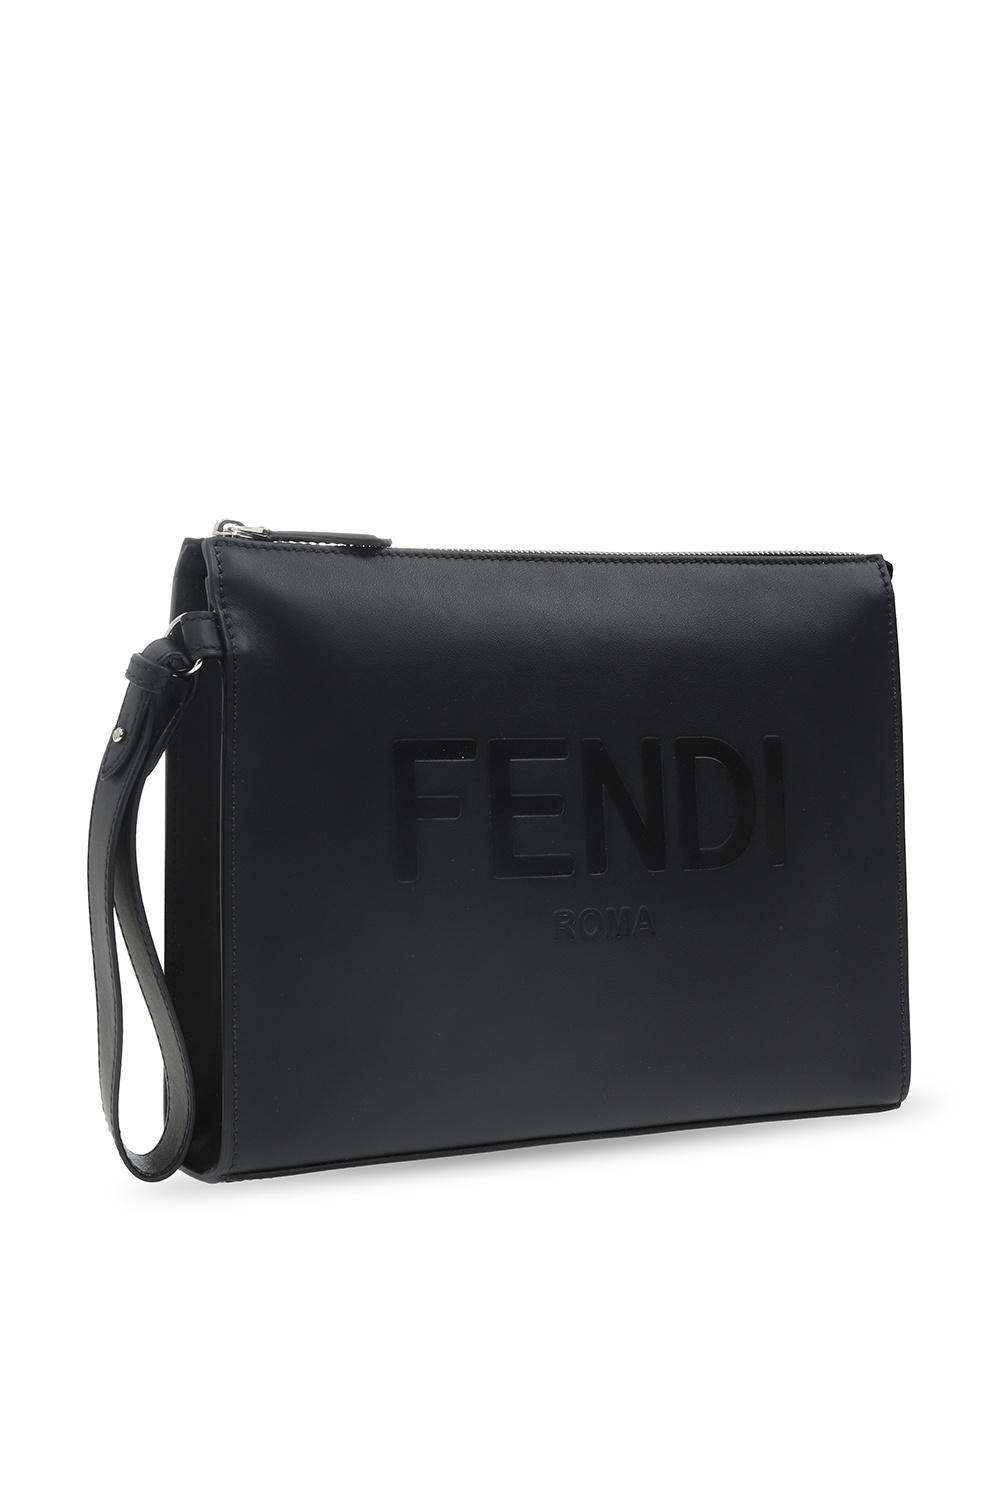 Fendi FENDI FIRST PUMPS